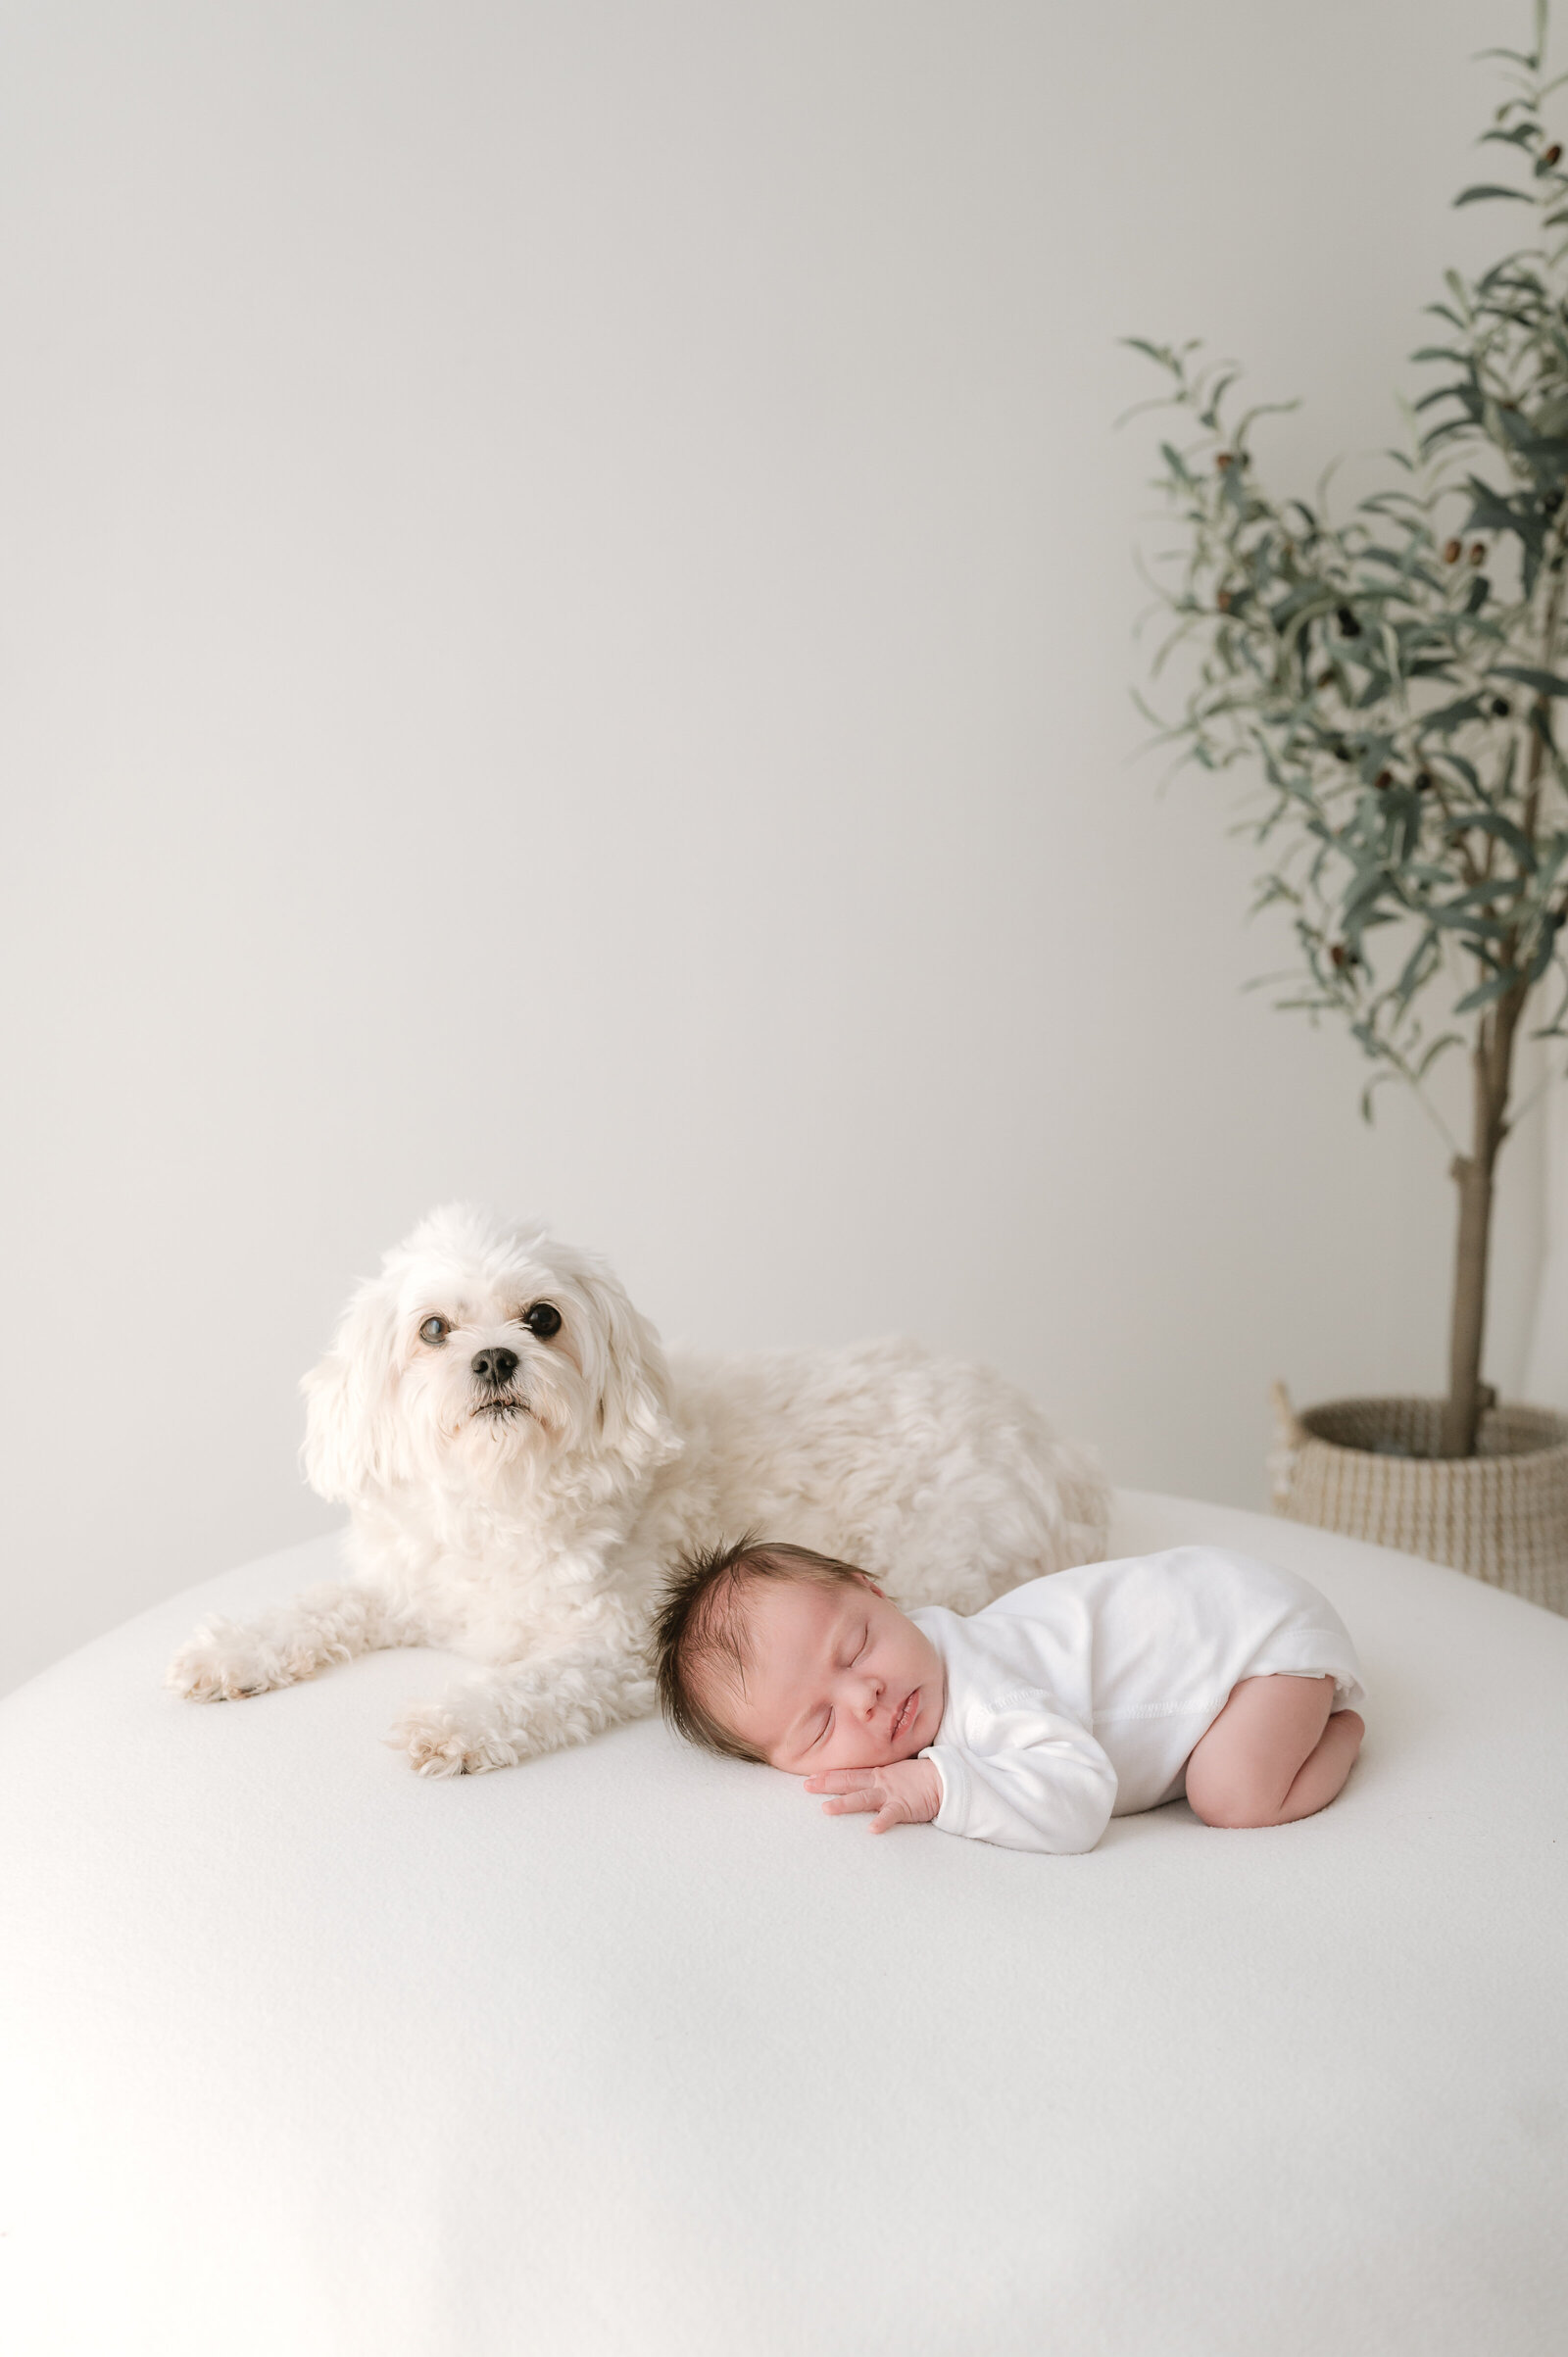 Newborn photography of a baby asleep next to a dog